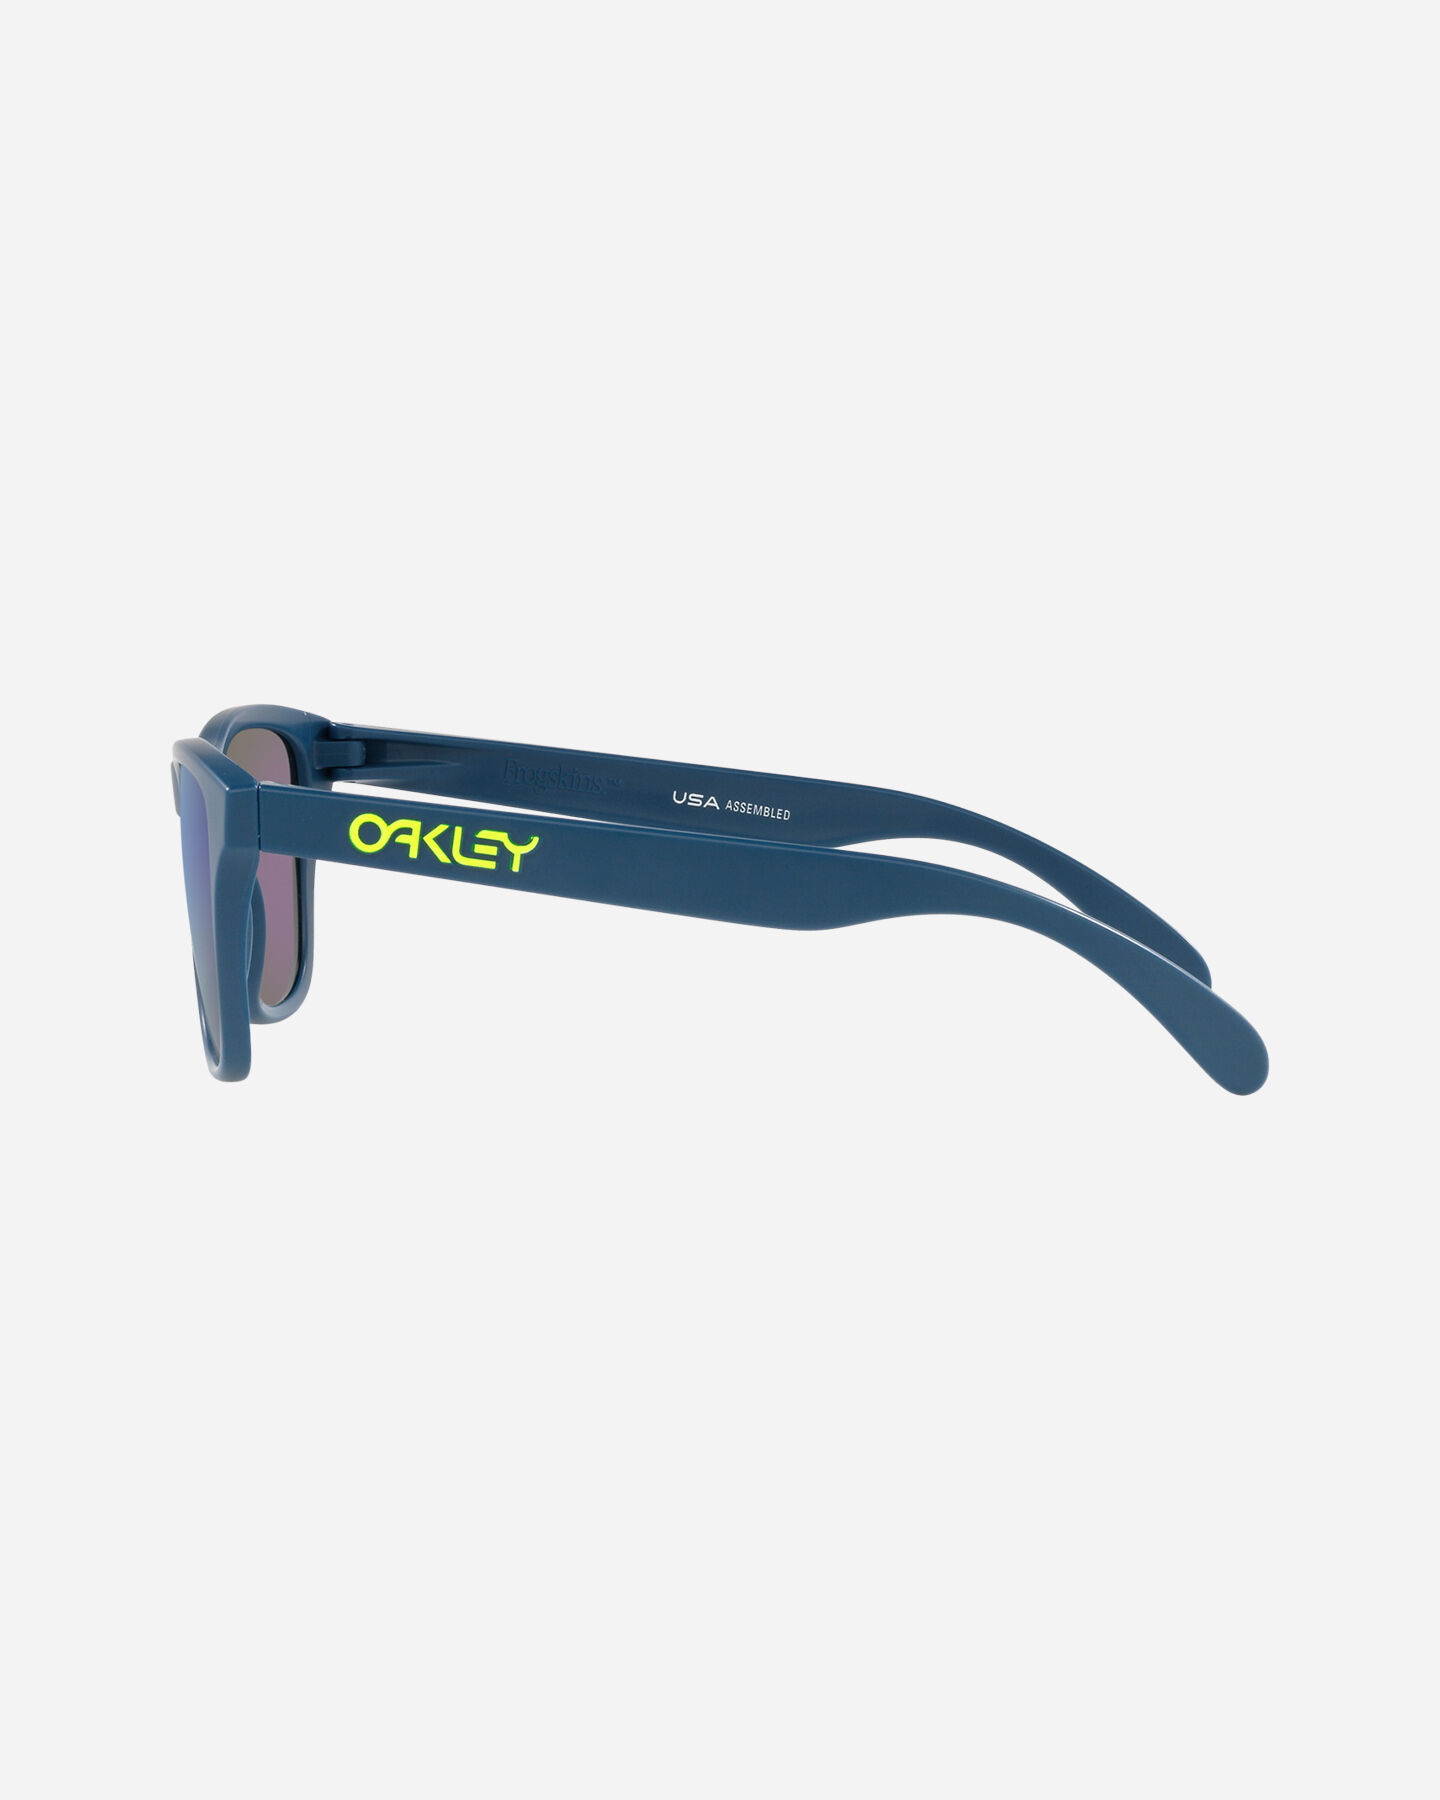  Occhiali OAKLEY FROGSKINS XS JR S5491705|90063253|U scatto 5